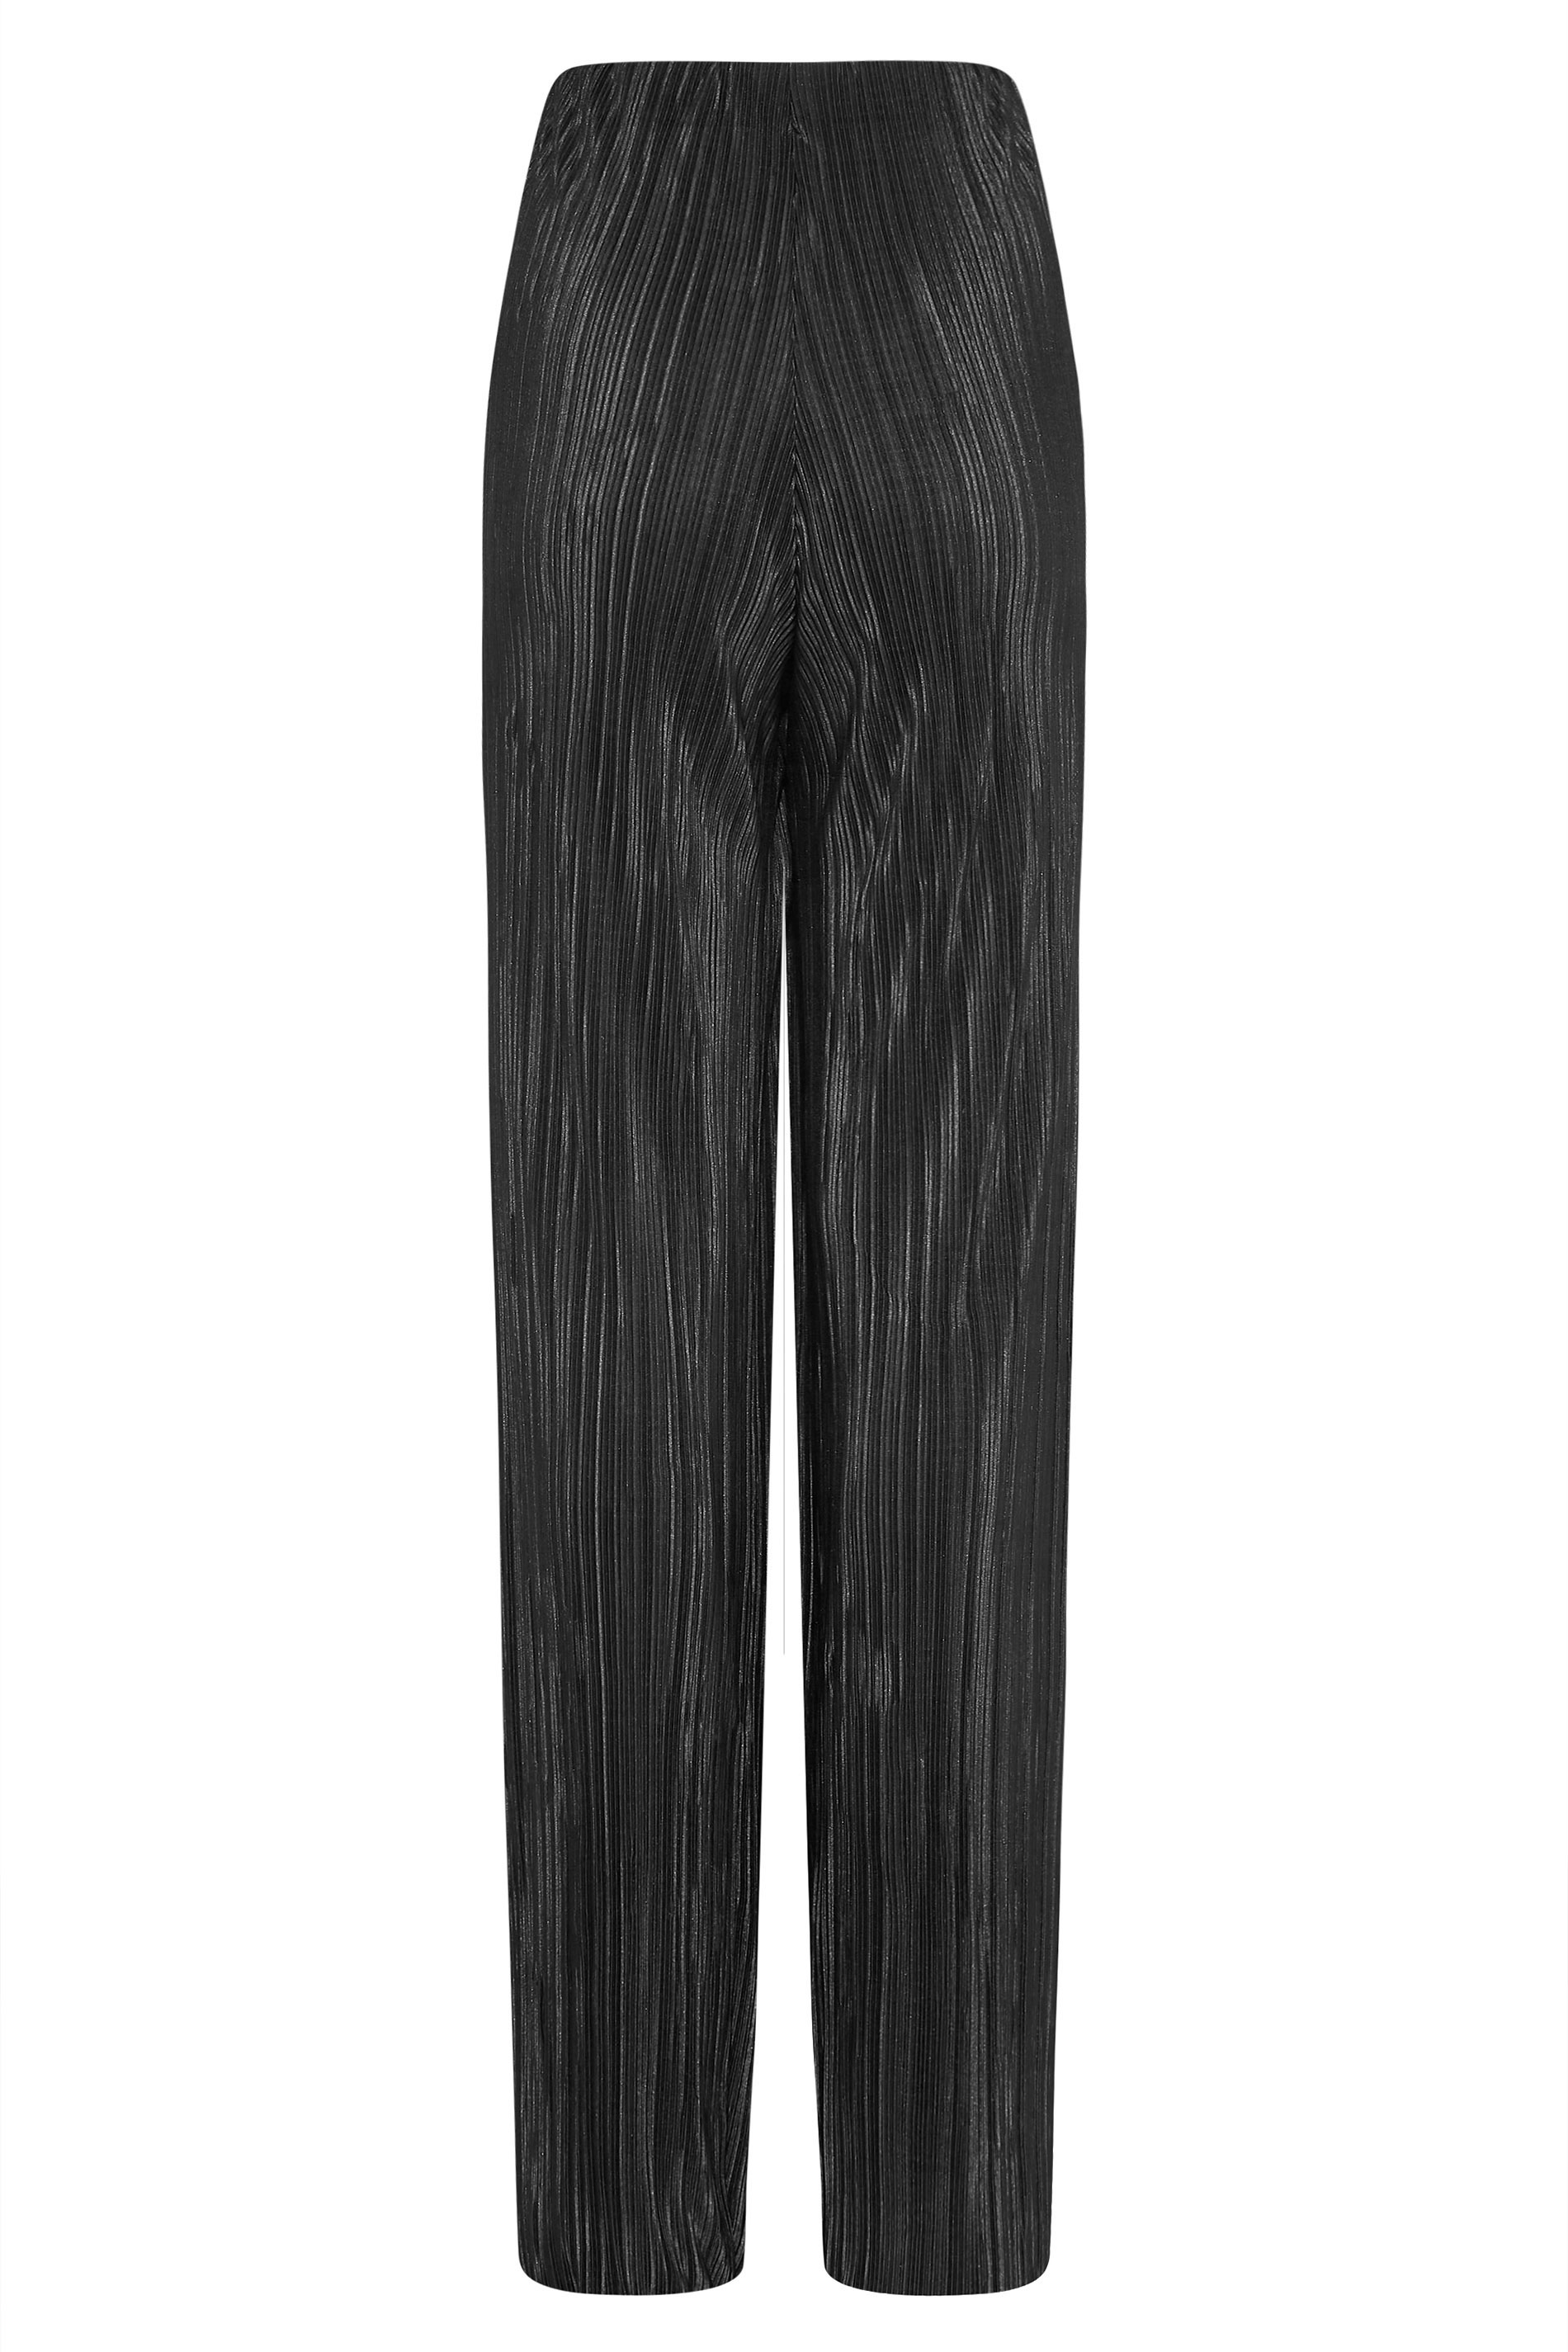 Tall Women's LTS Black Glitter Plisse Wide Leg Trousers | Long Tall Sally 3